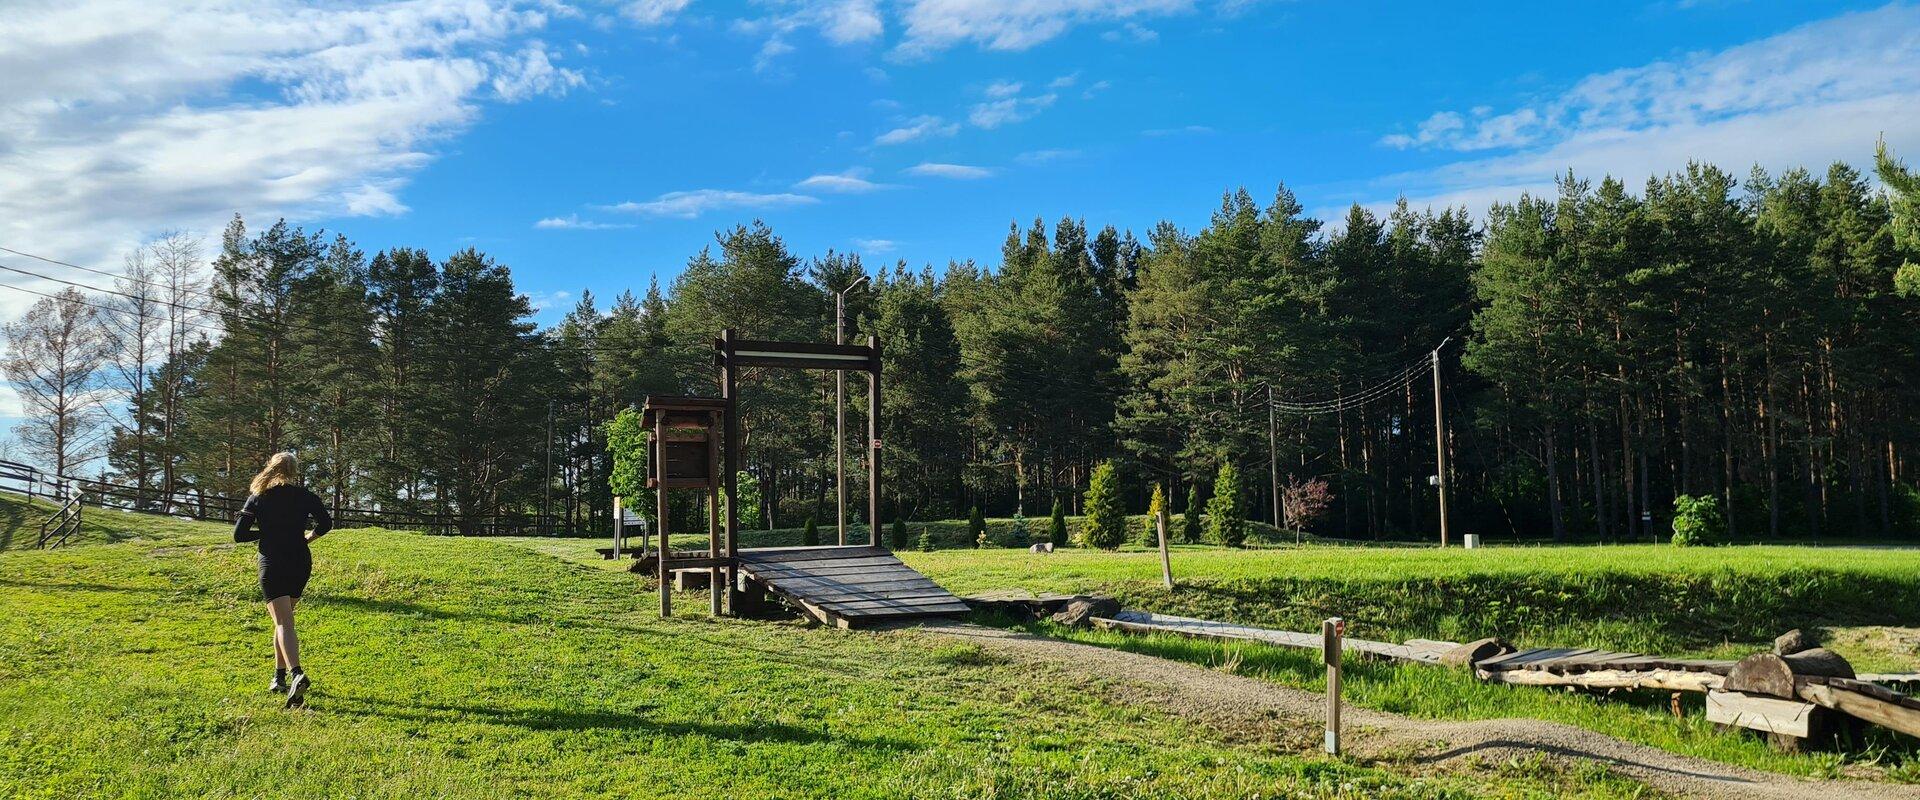 Äkkeküla sports and recreation area in Narva